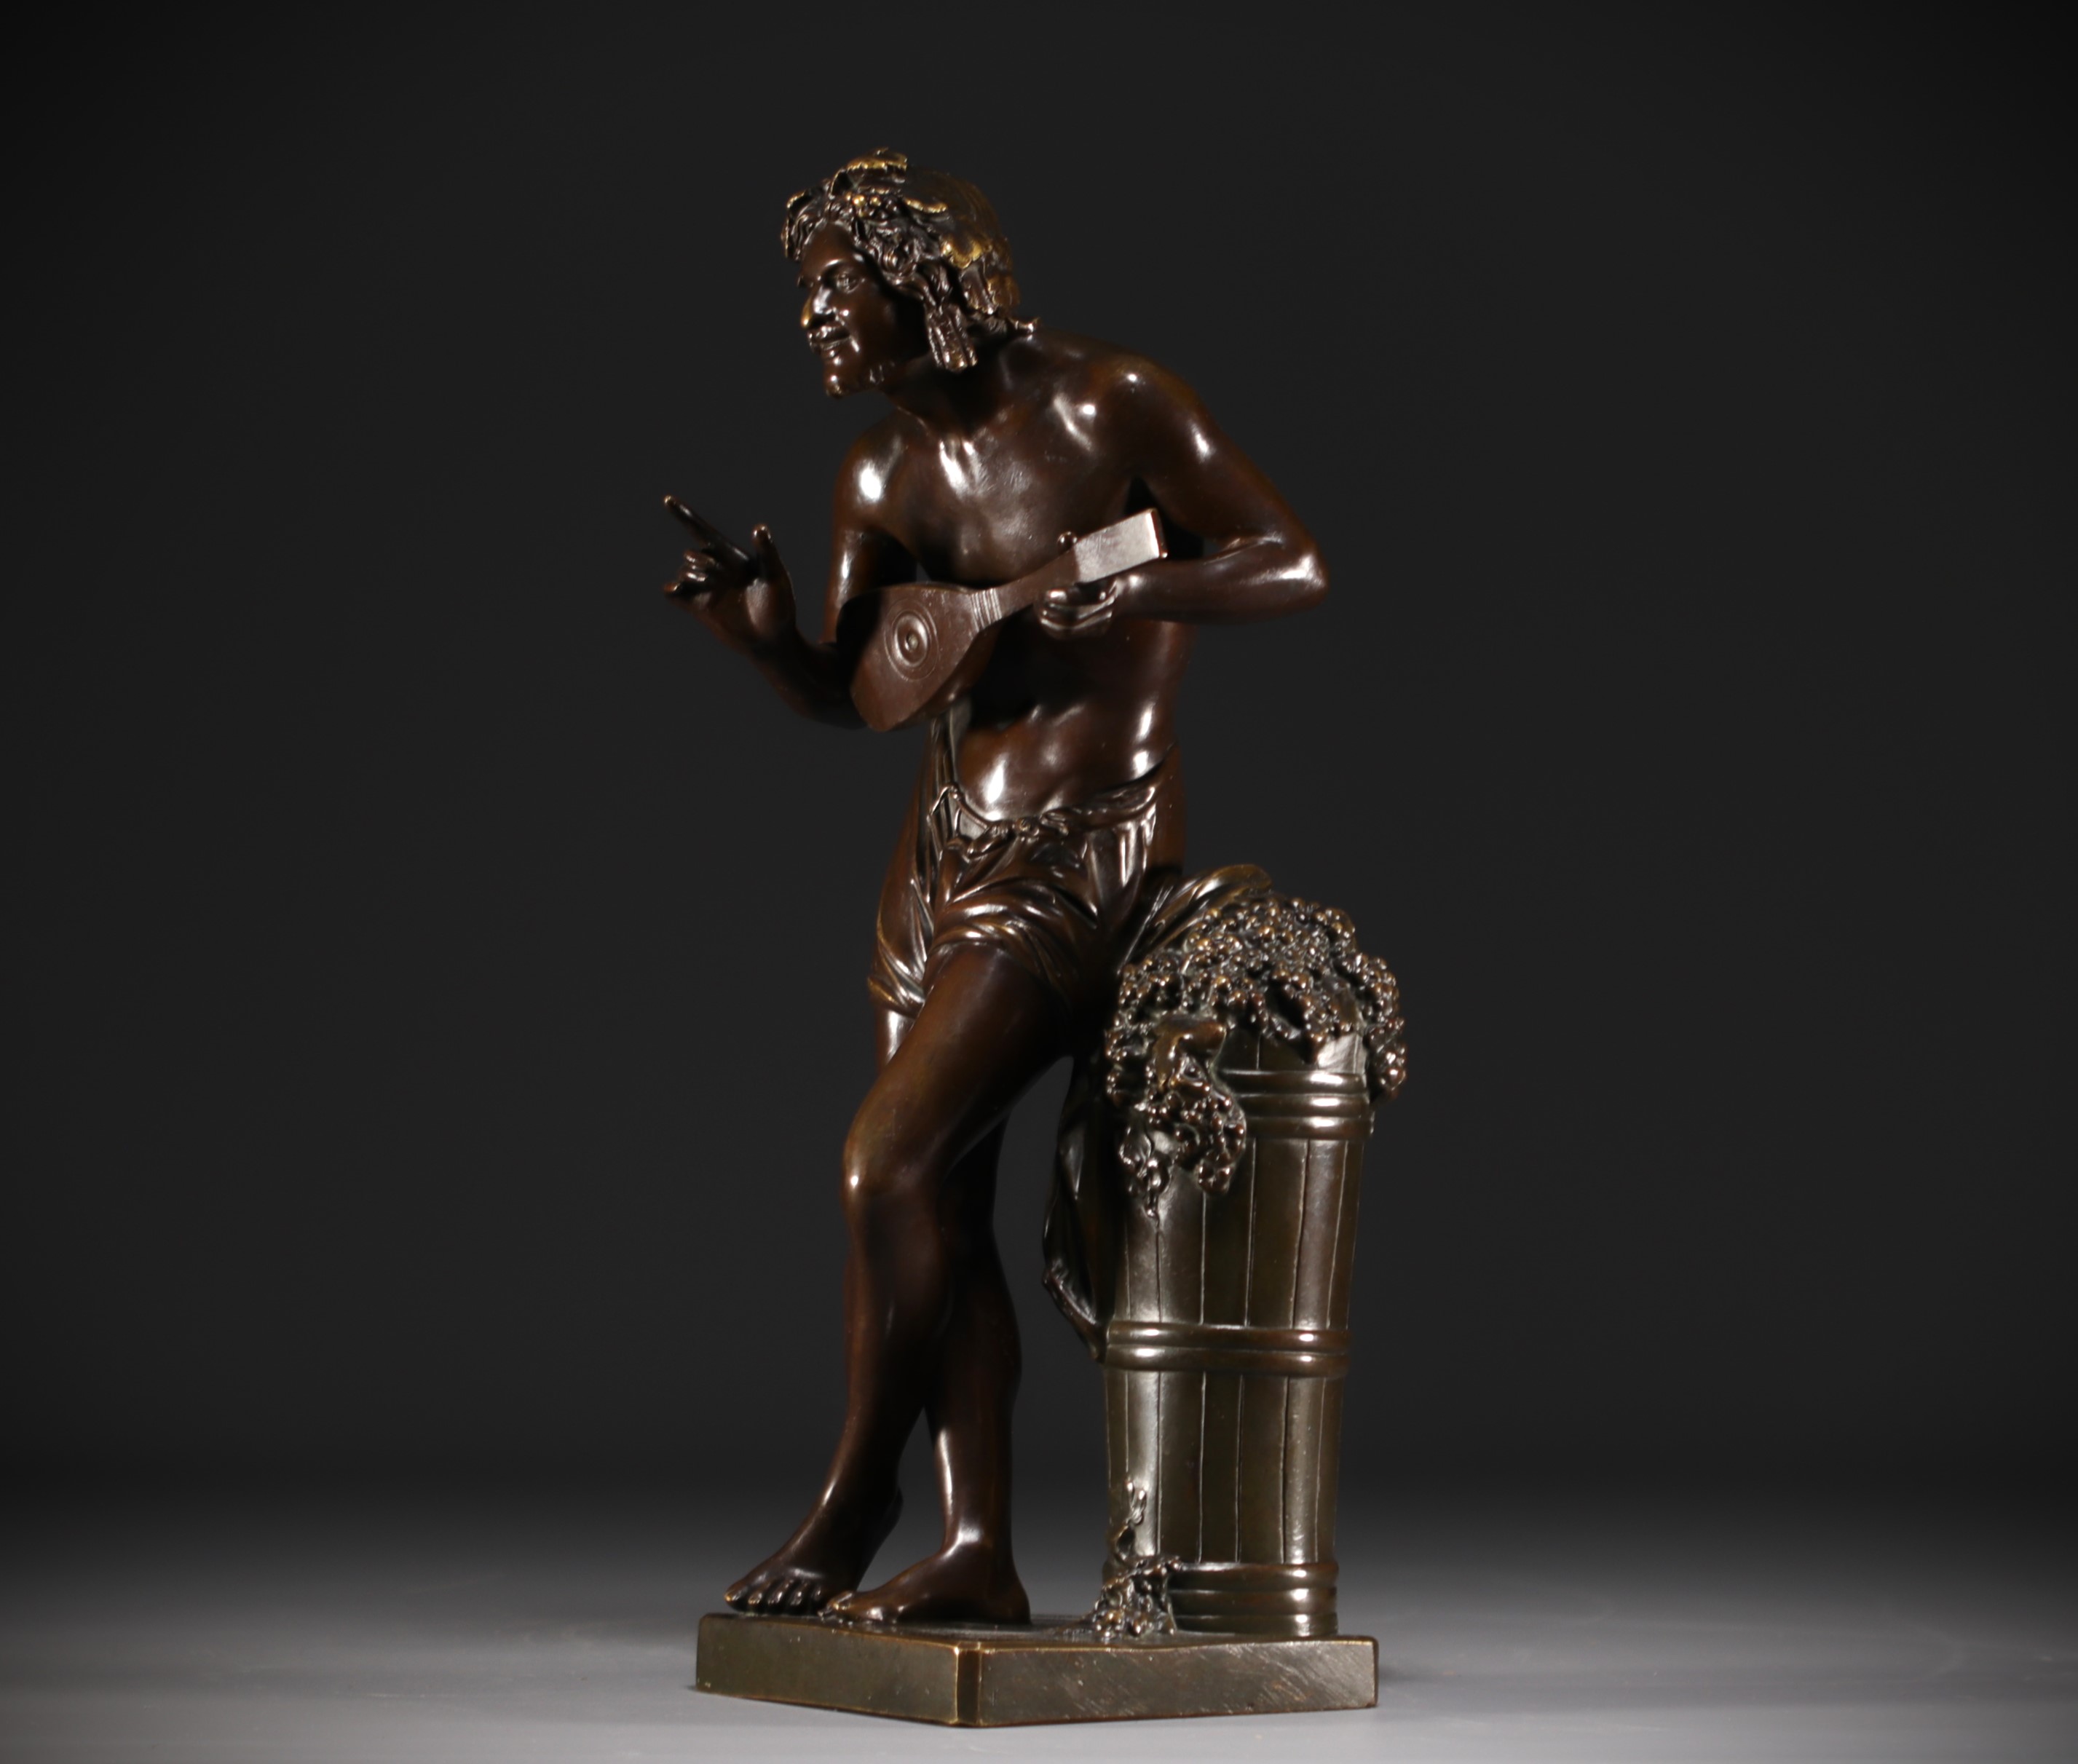 Francisque Joseph DURET (1804-1865) after - "L'Improvisateur" Sculpture in bronze with brown patina. - Image 3 of 5